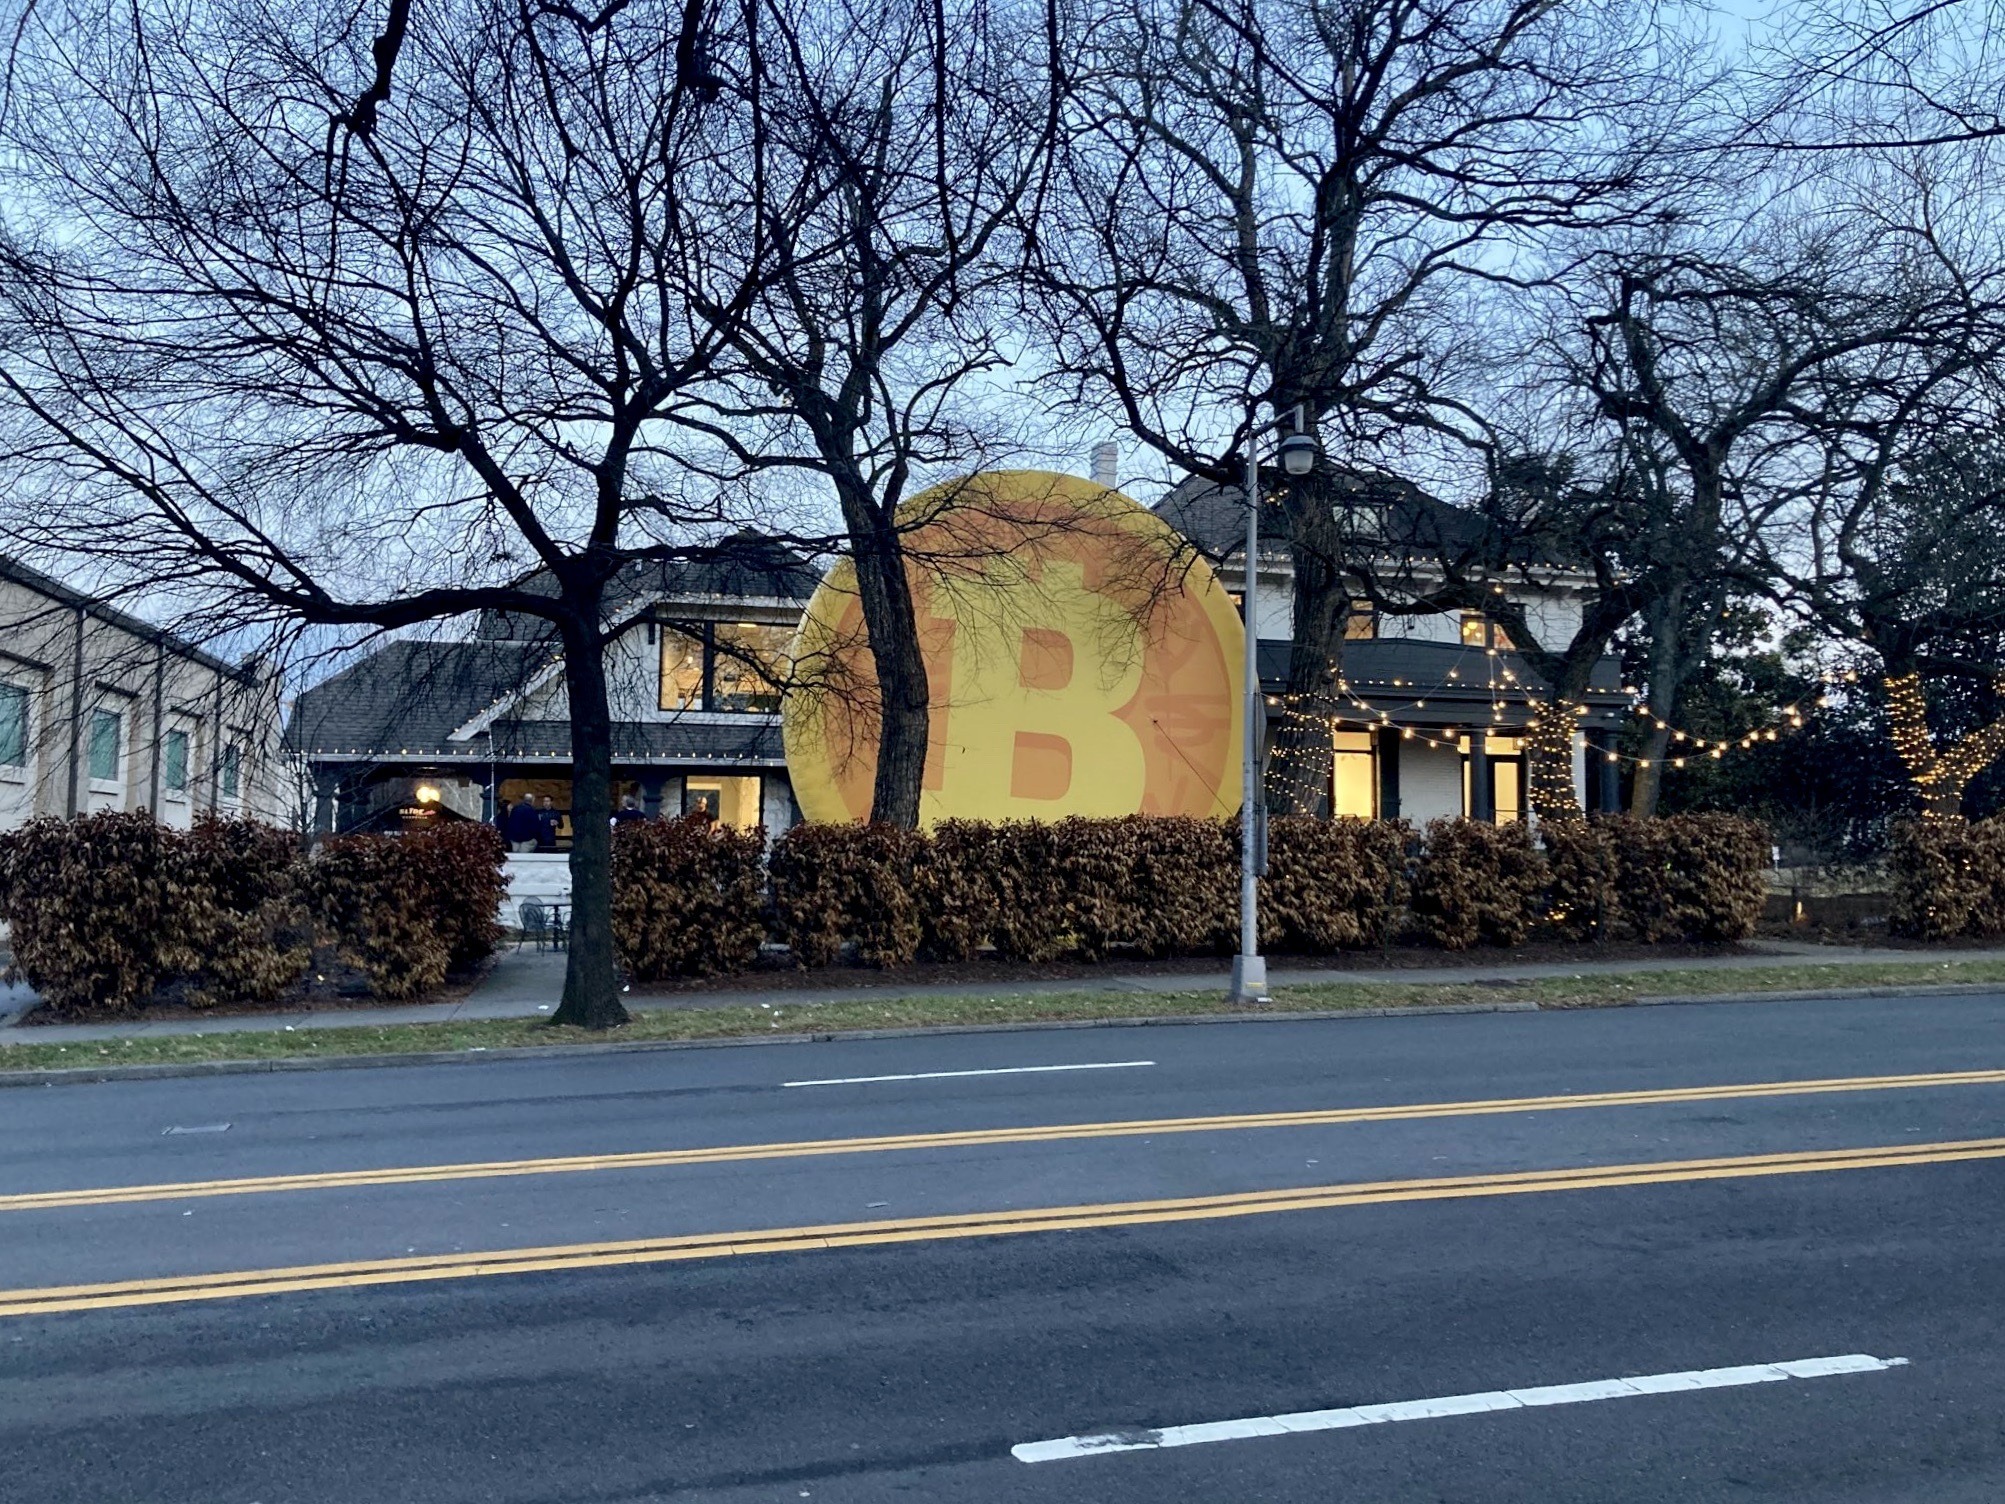 Spot The Bitcoiner’s House